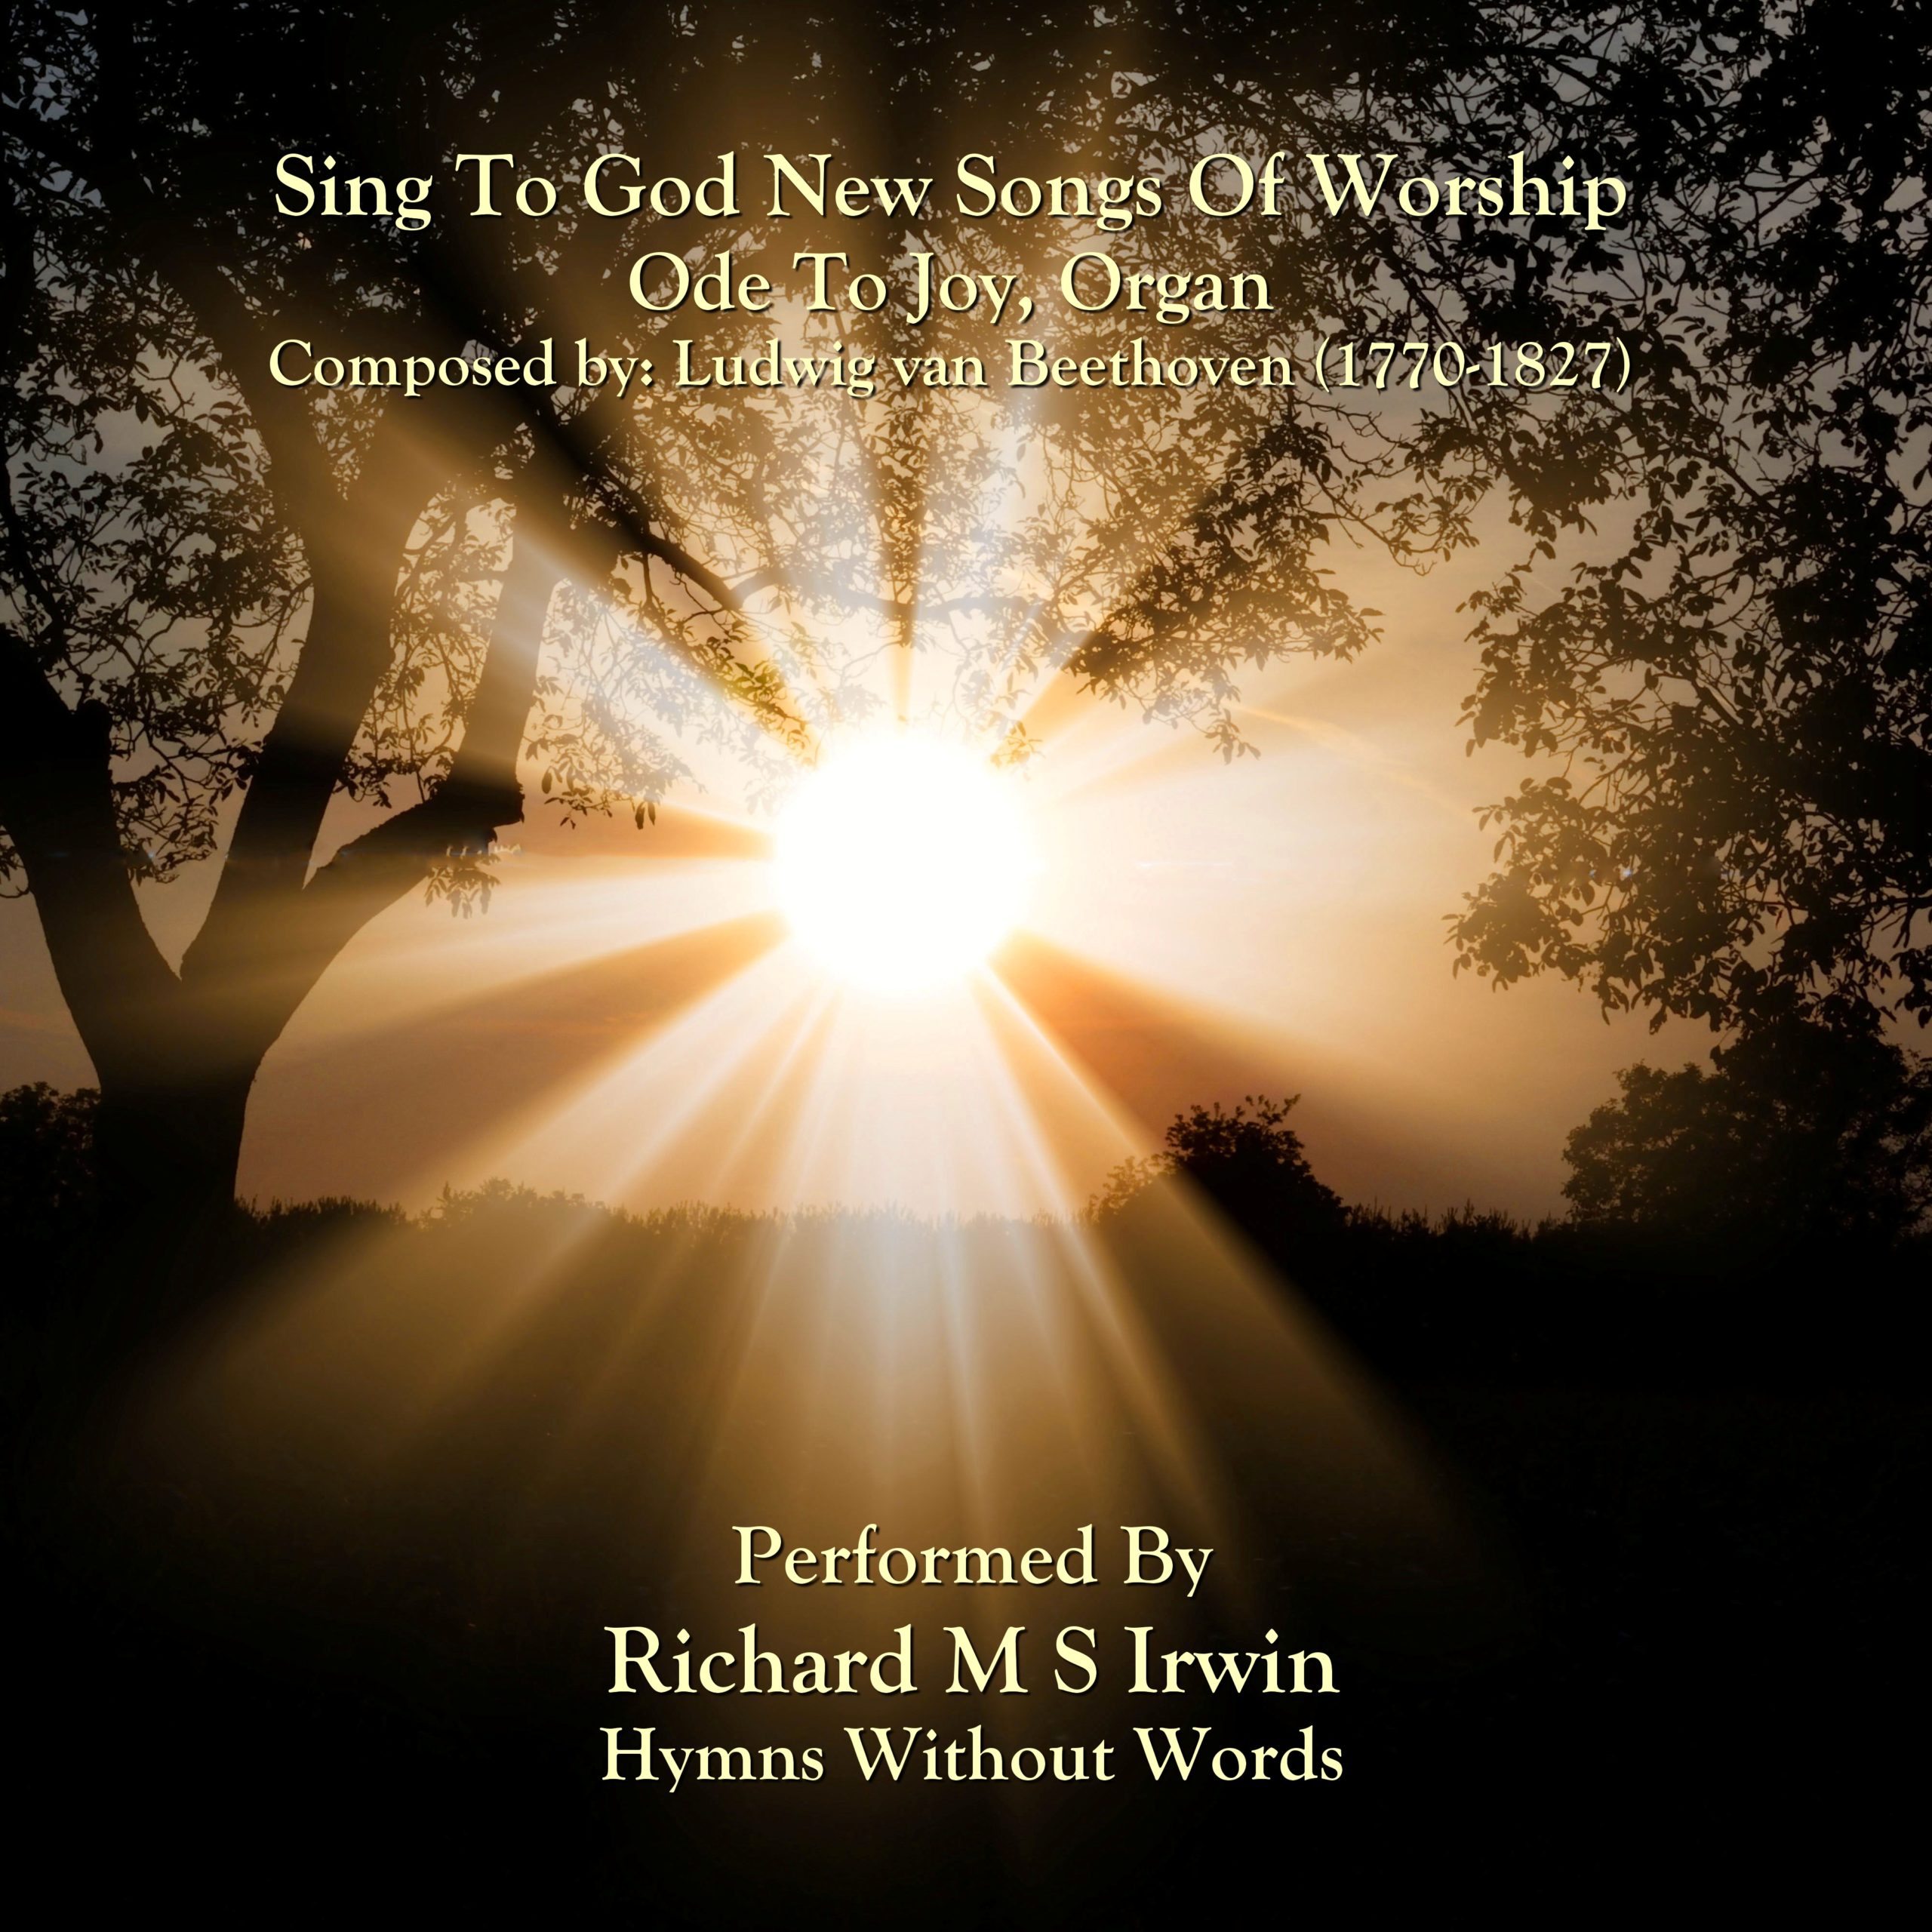 Sing To God New Songs Of Worship (Ode To Joy, Organ, 3 Verses)